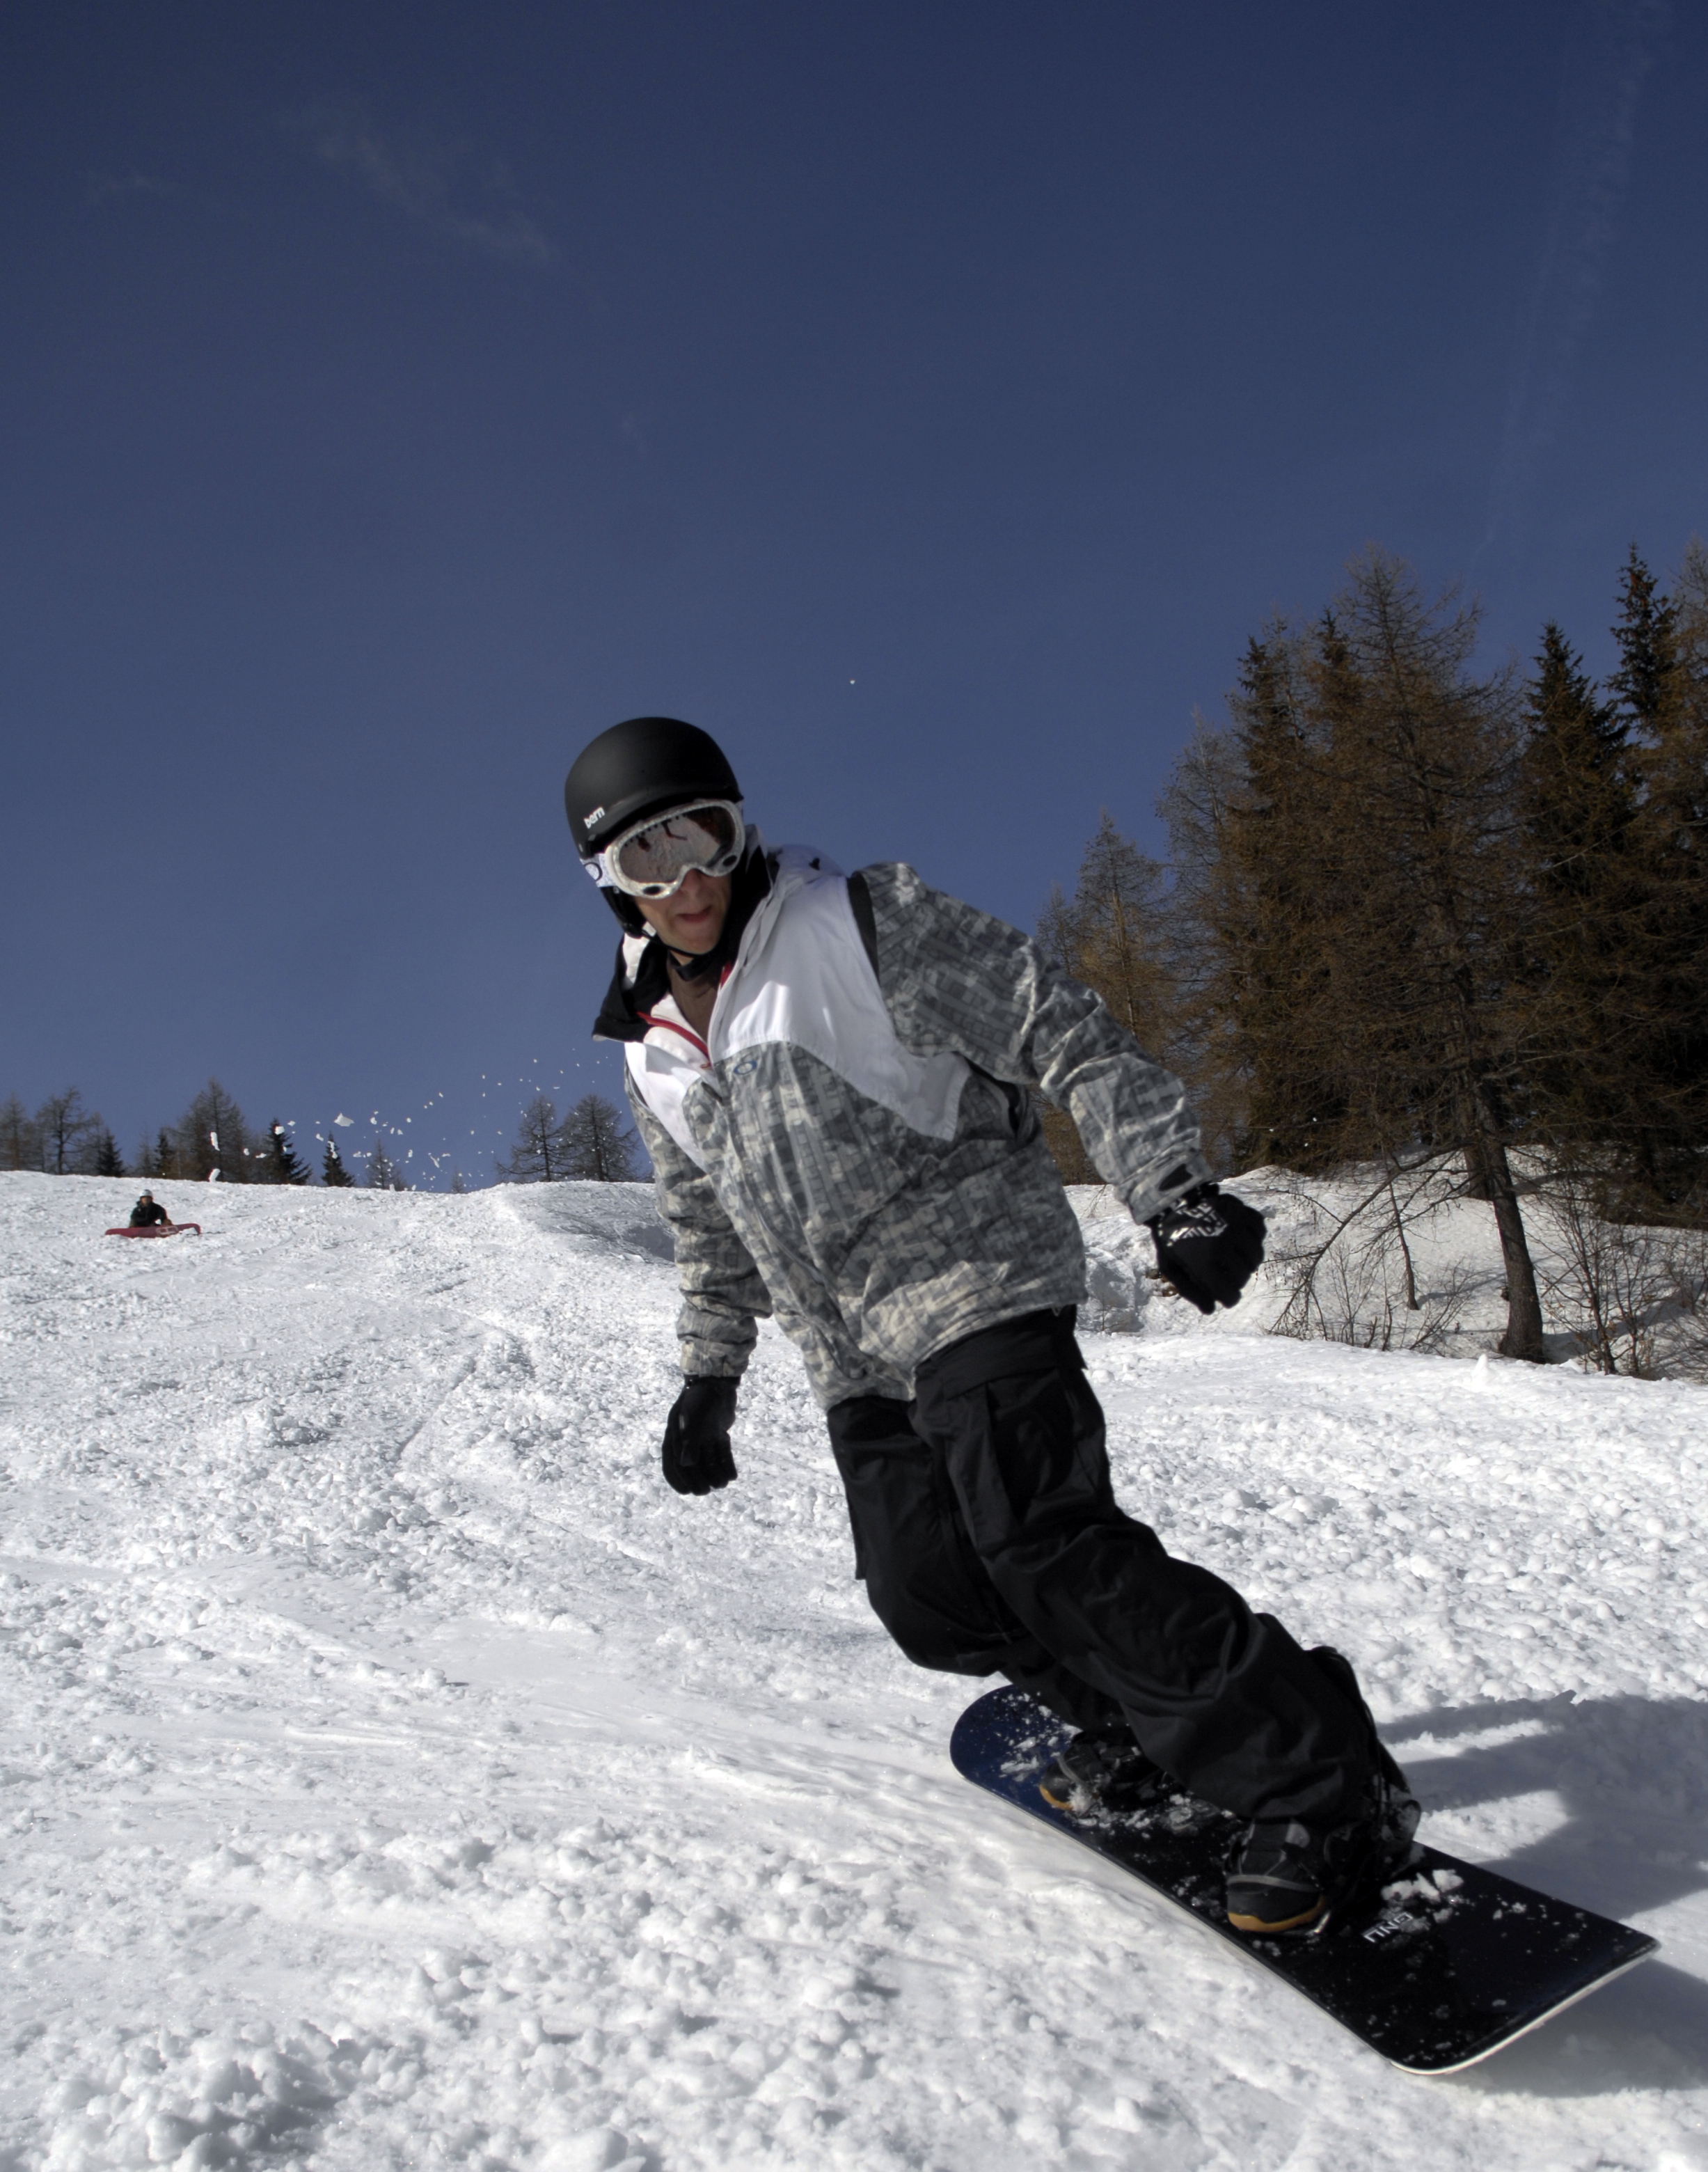 File:Aviano snowboarder 2.JPG - Wikimedia Commons